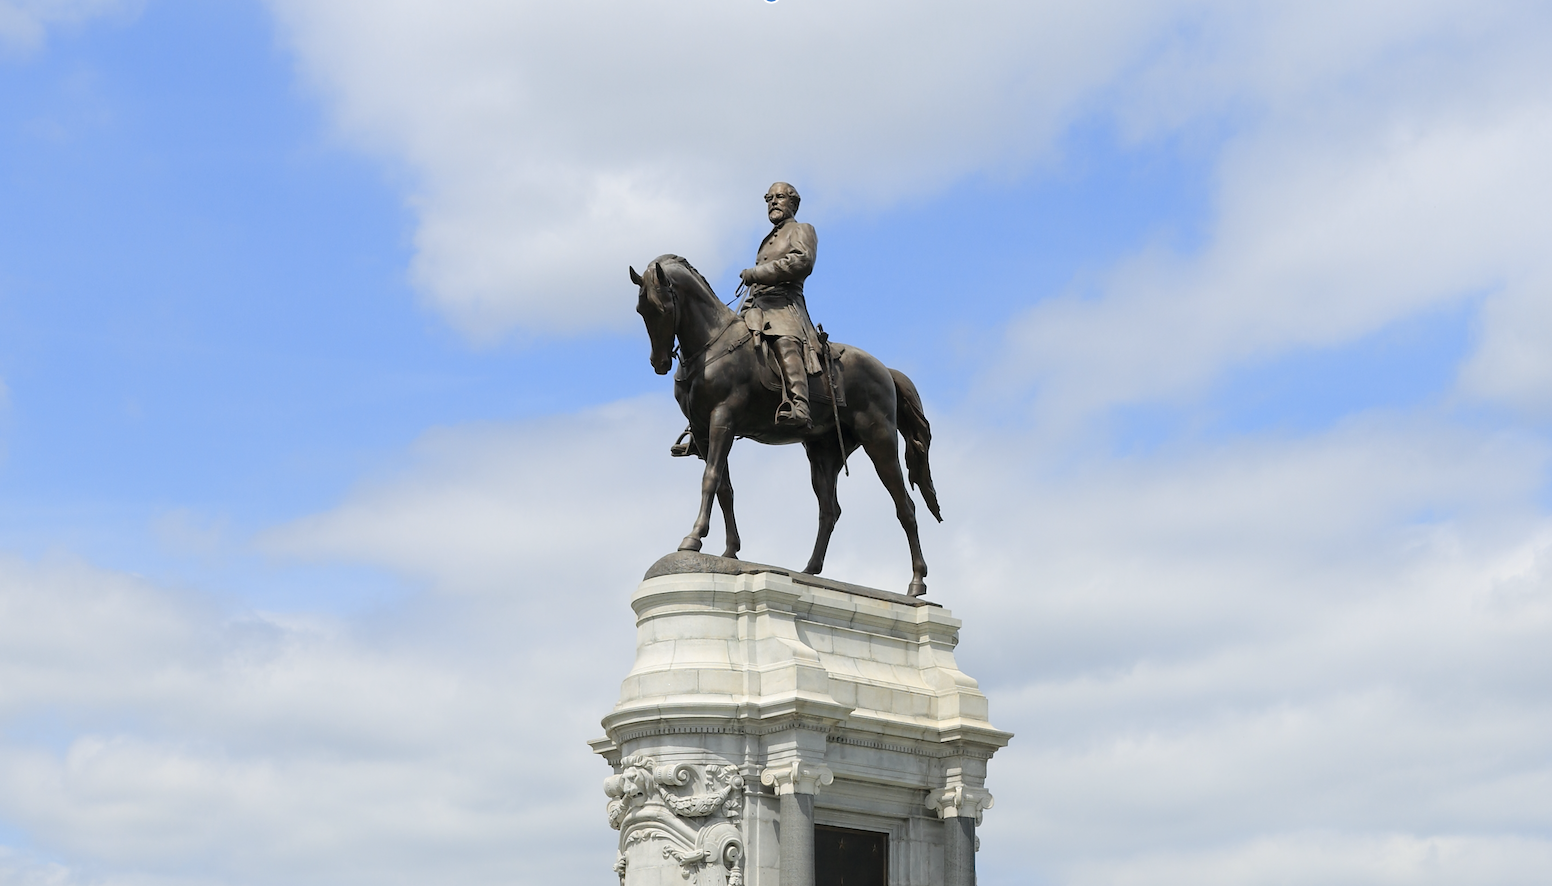 Virginia judge blocks removal of Confederate statue in Richmond